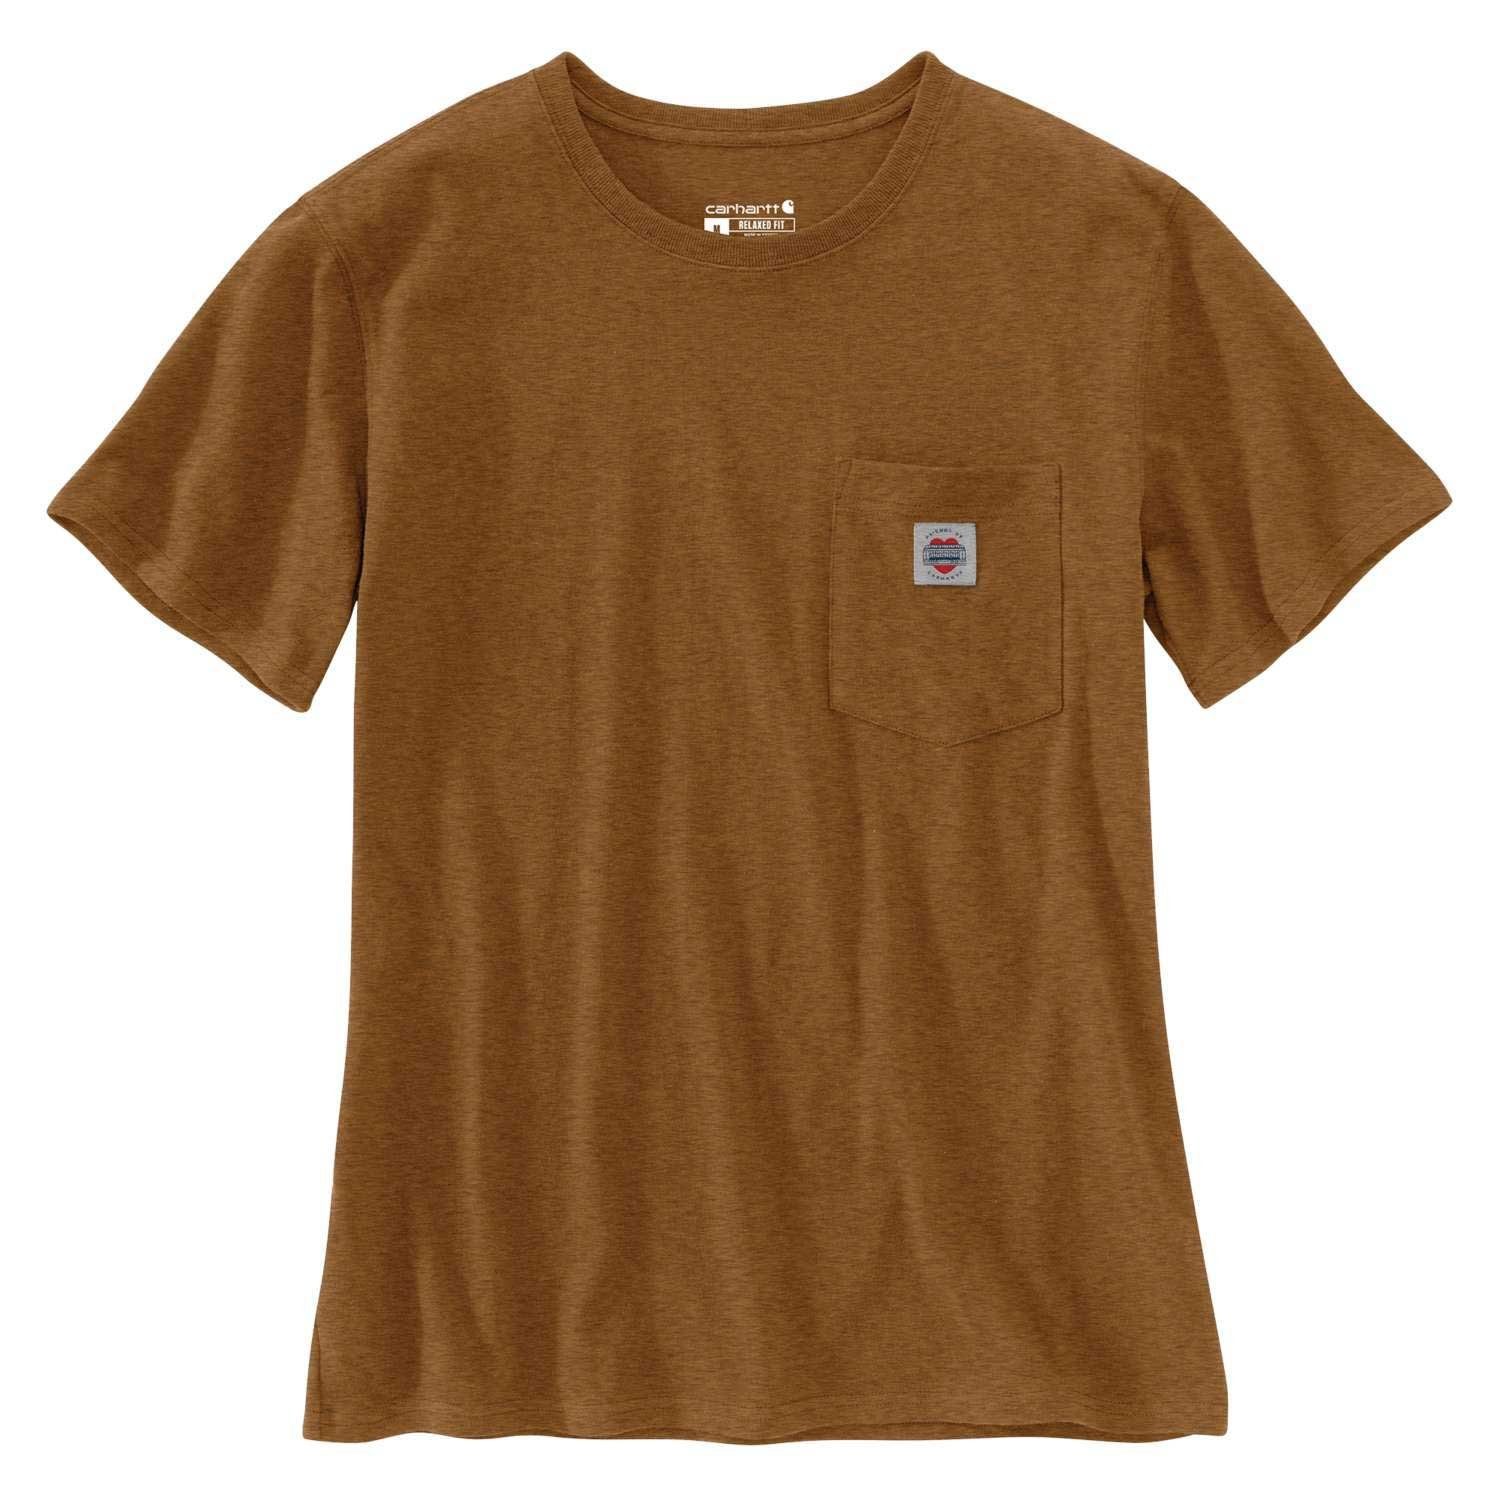 Carhartt T-Shirt Friends of Carhartt Heather Walnut Edition, Limited Loose Fit